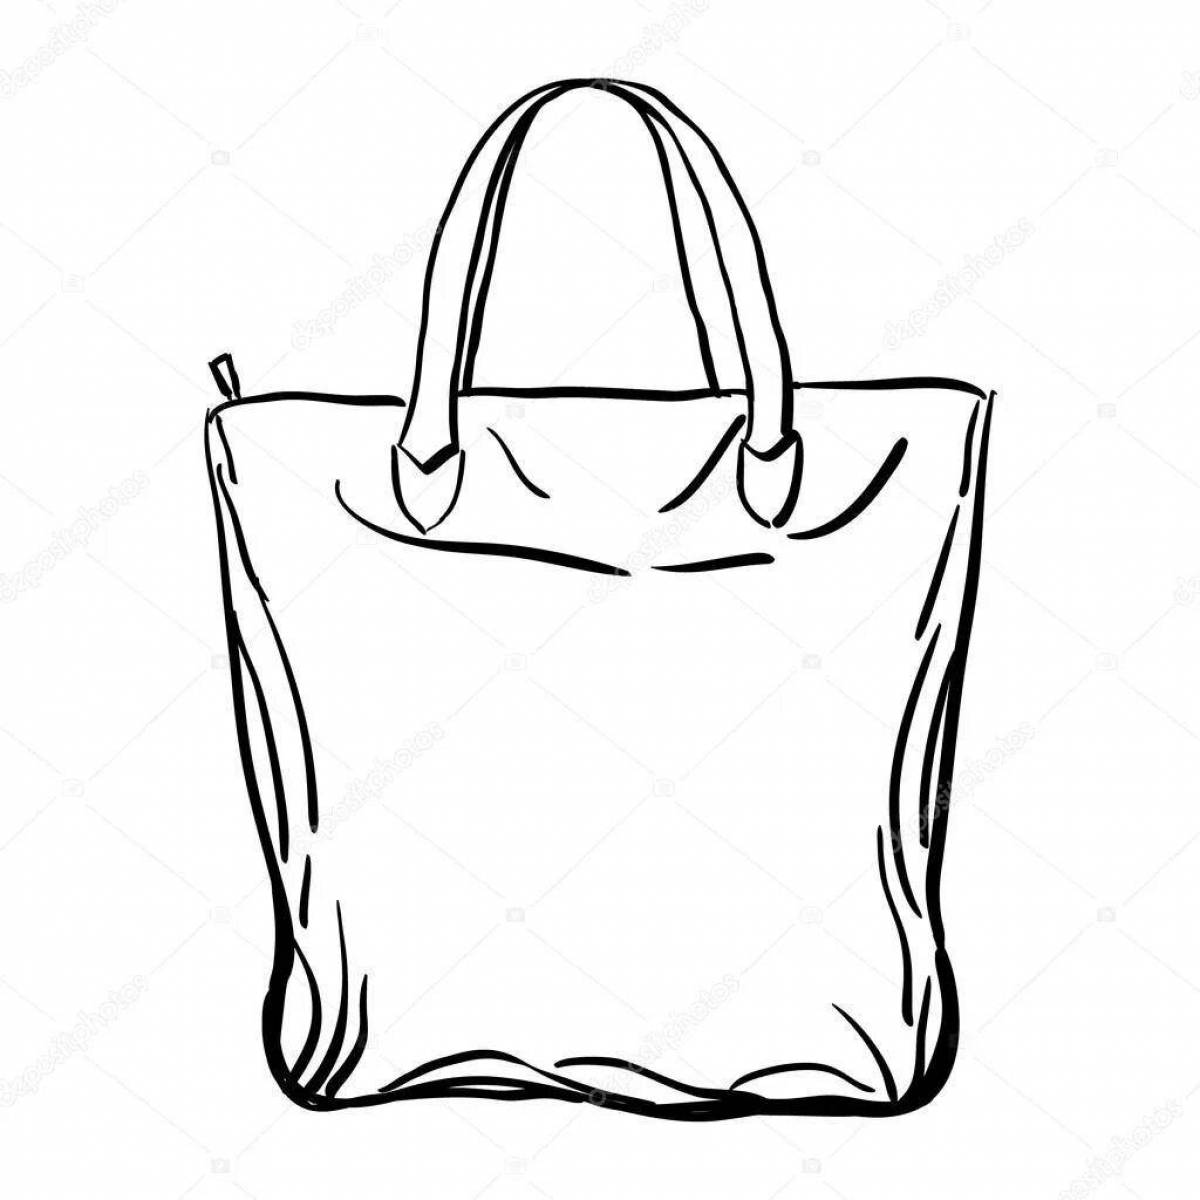 Coloring page fashion shopping bag